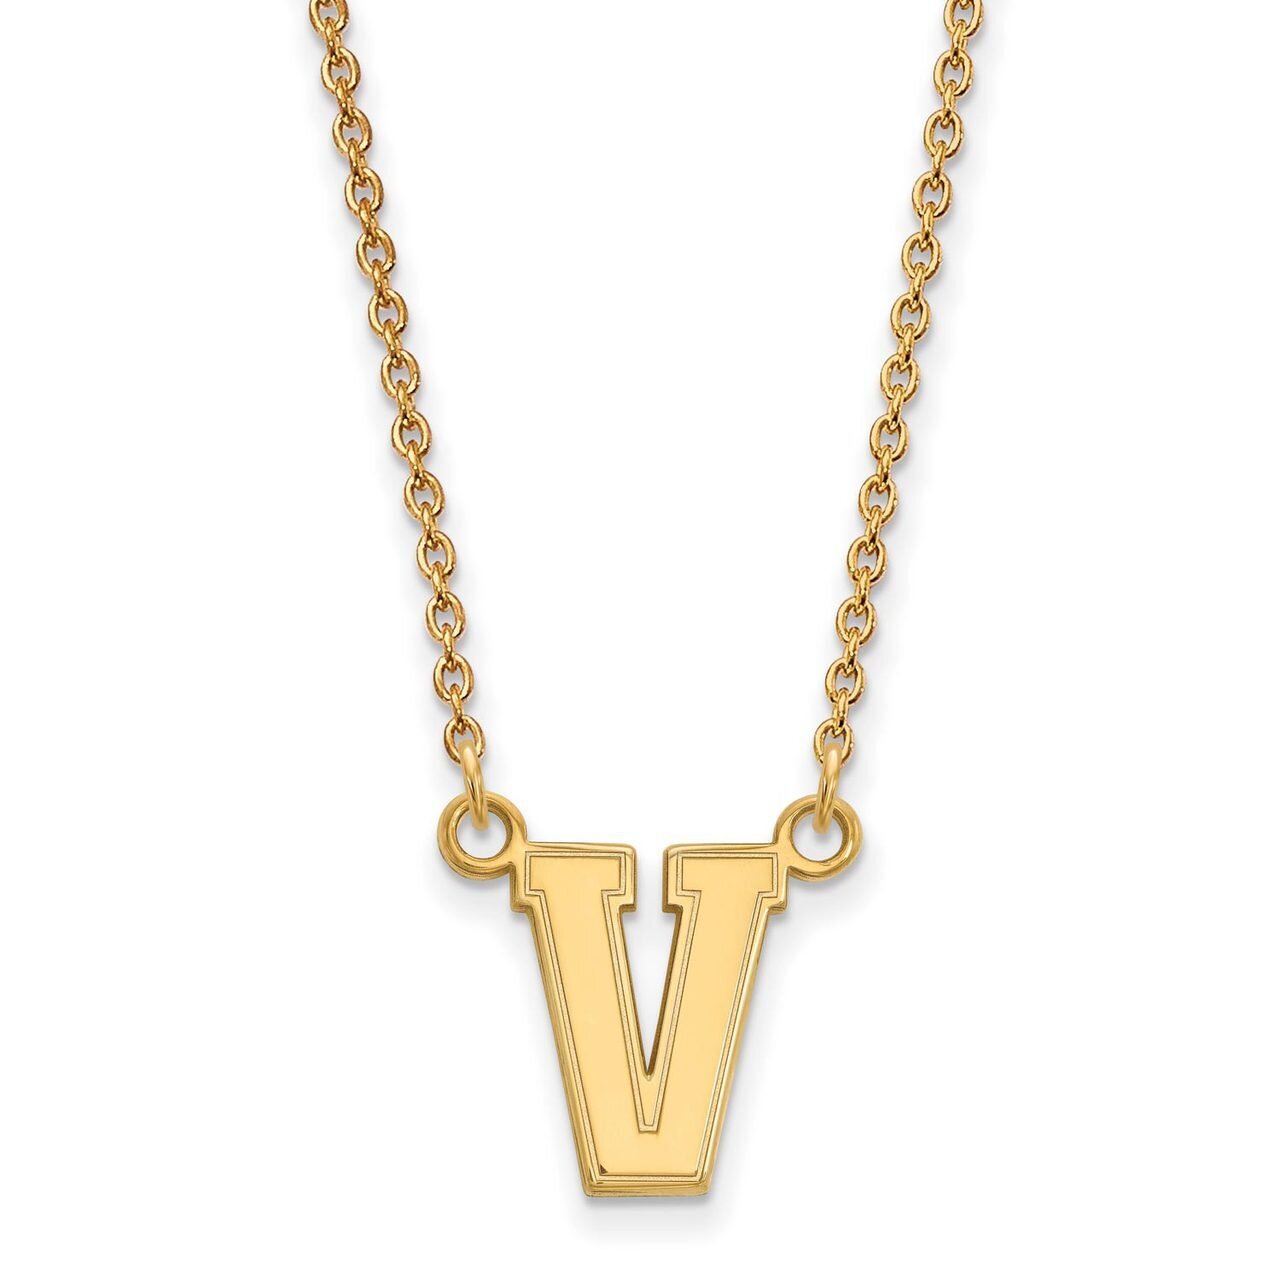 Vanderbilt University Small Pendant with Chain Necklace 14k Yellow Gold 4Y007VAU-18